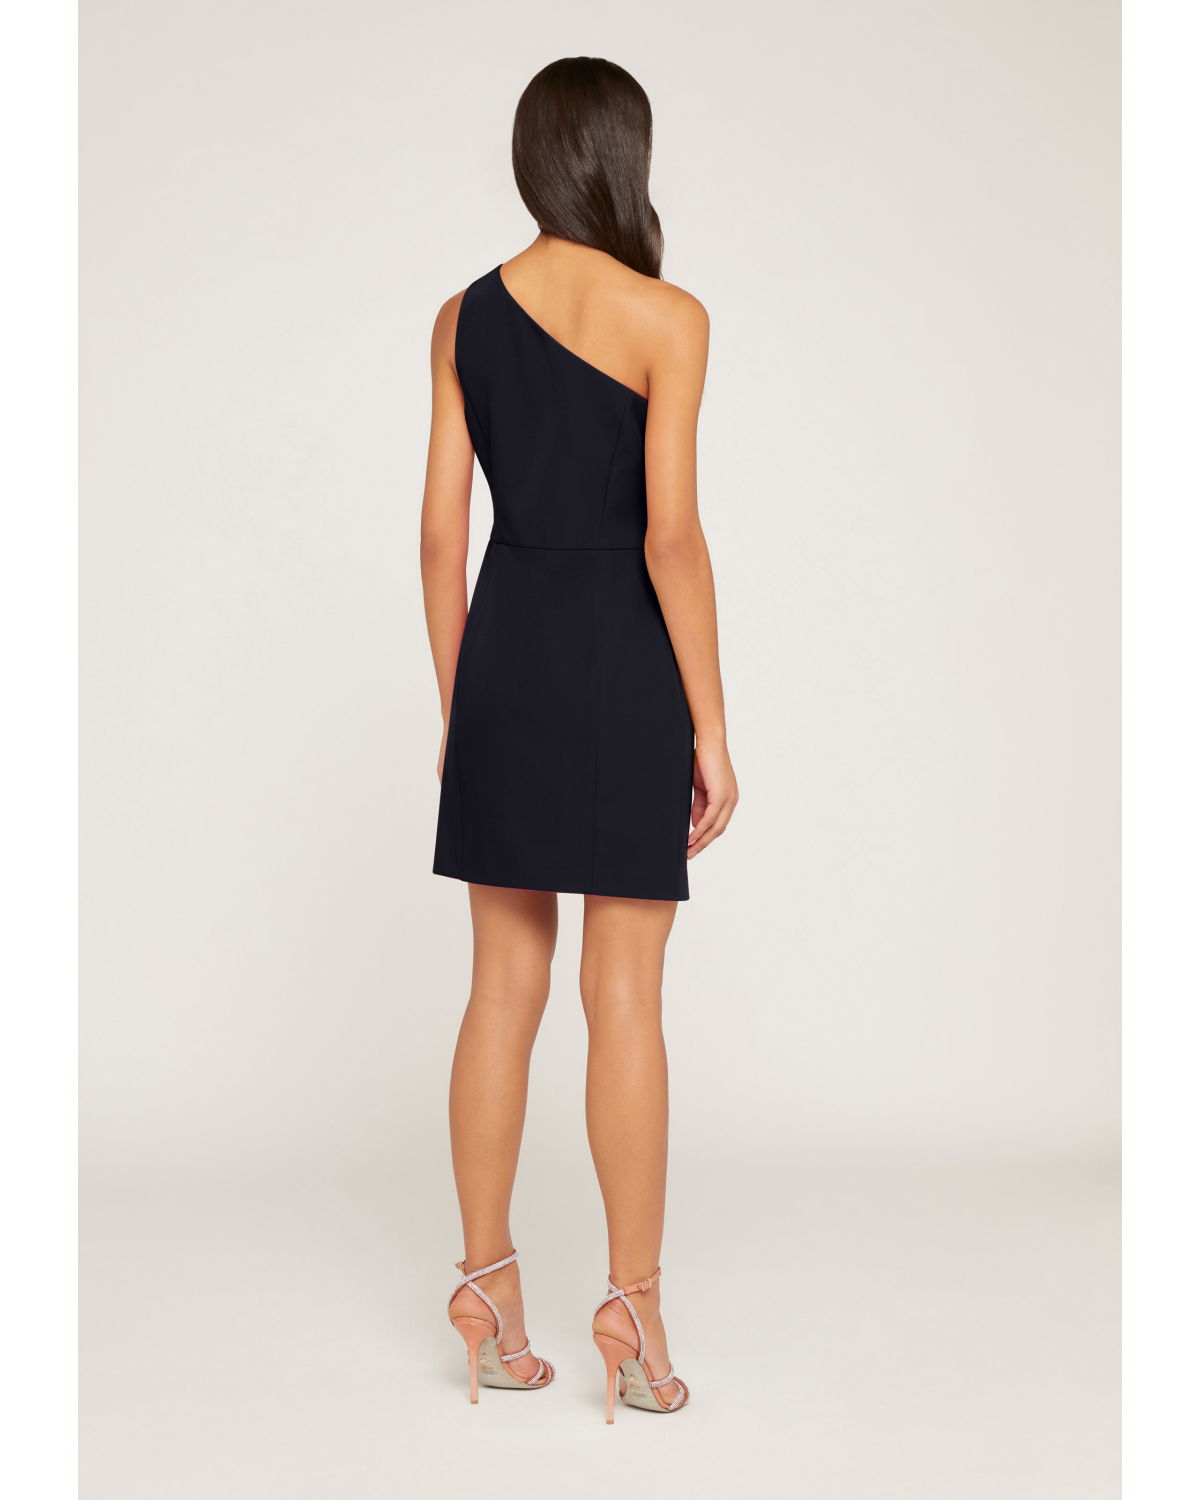 One-shoulder black dress with bow | | Genny